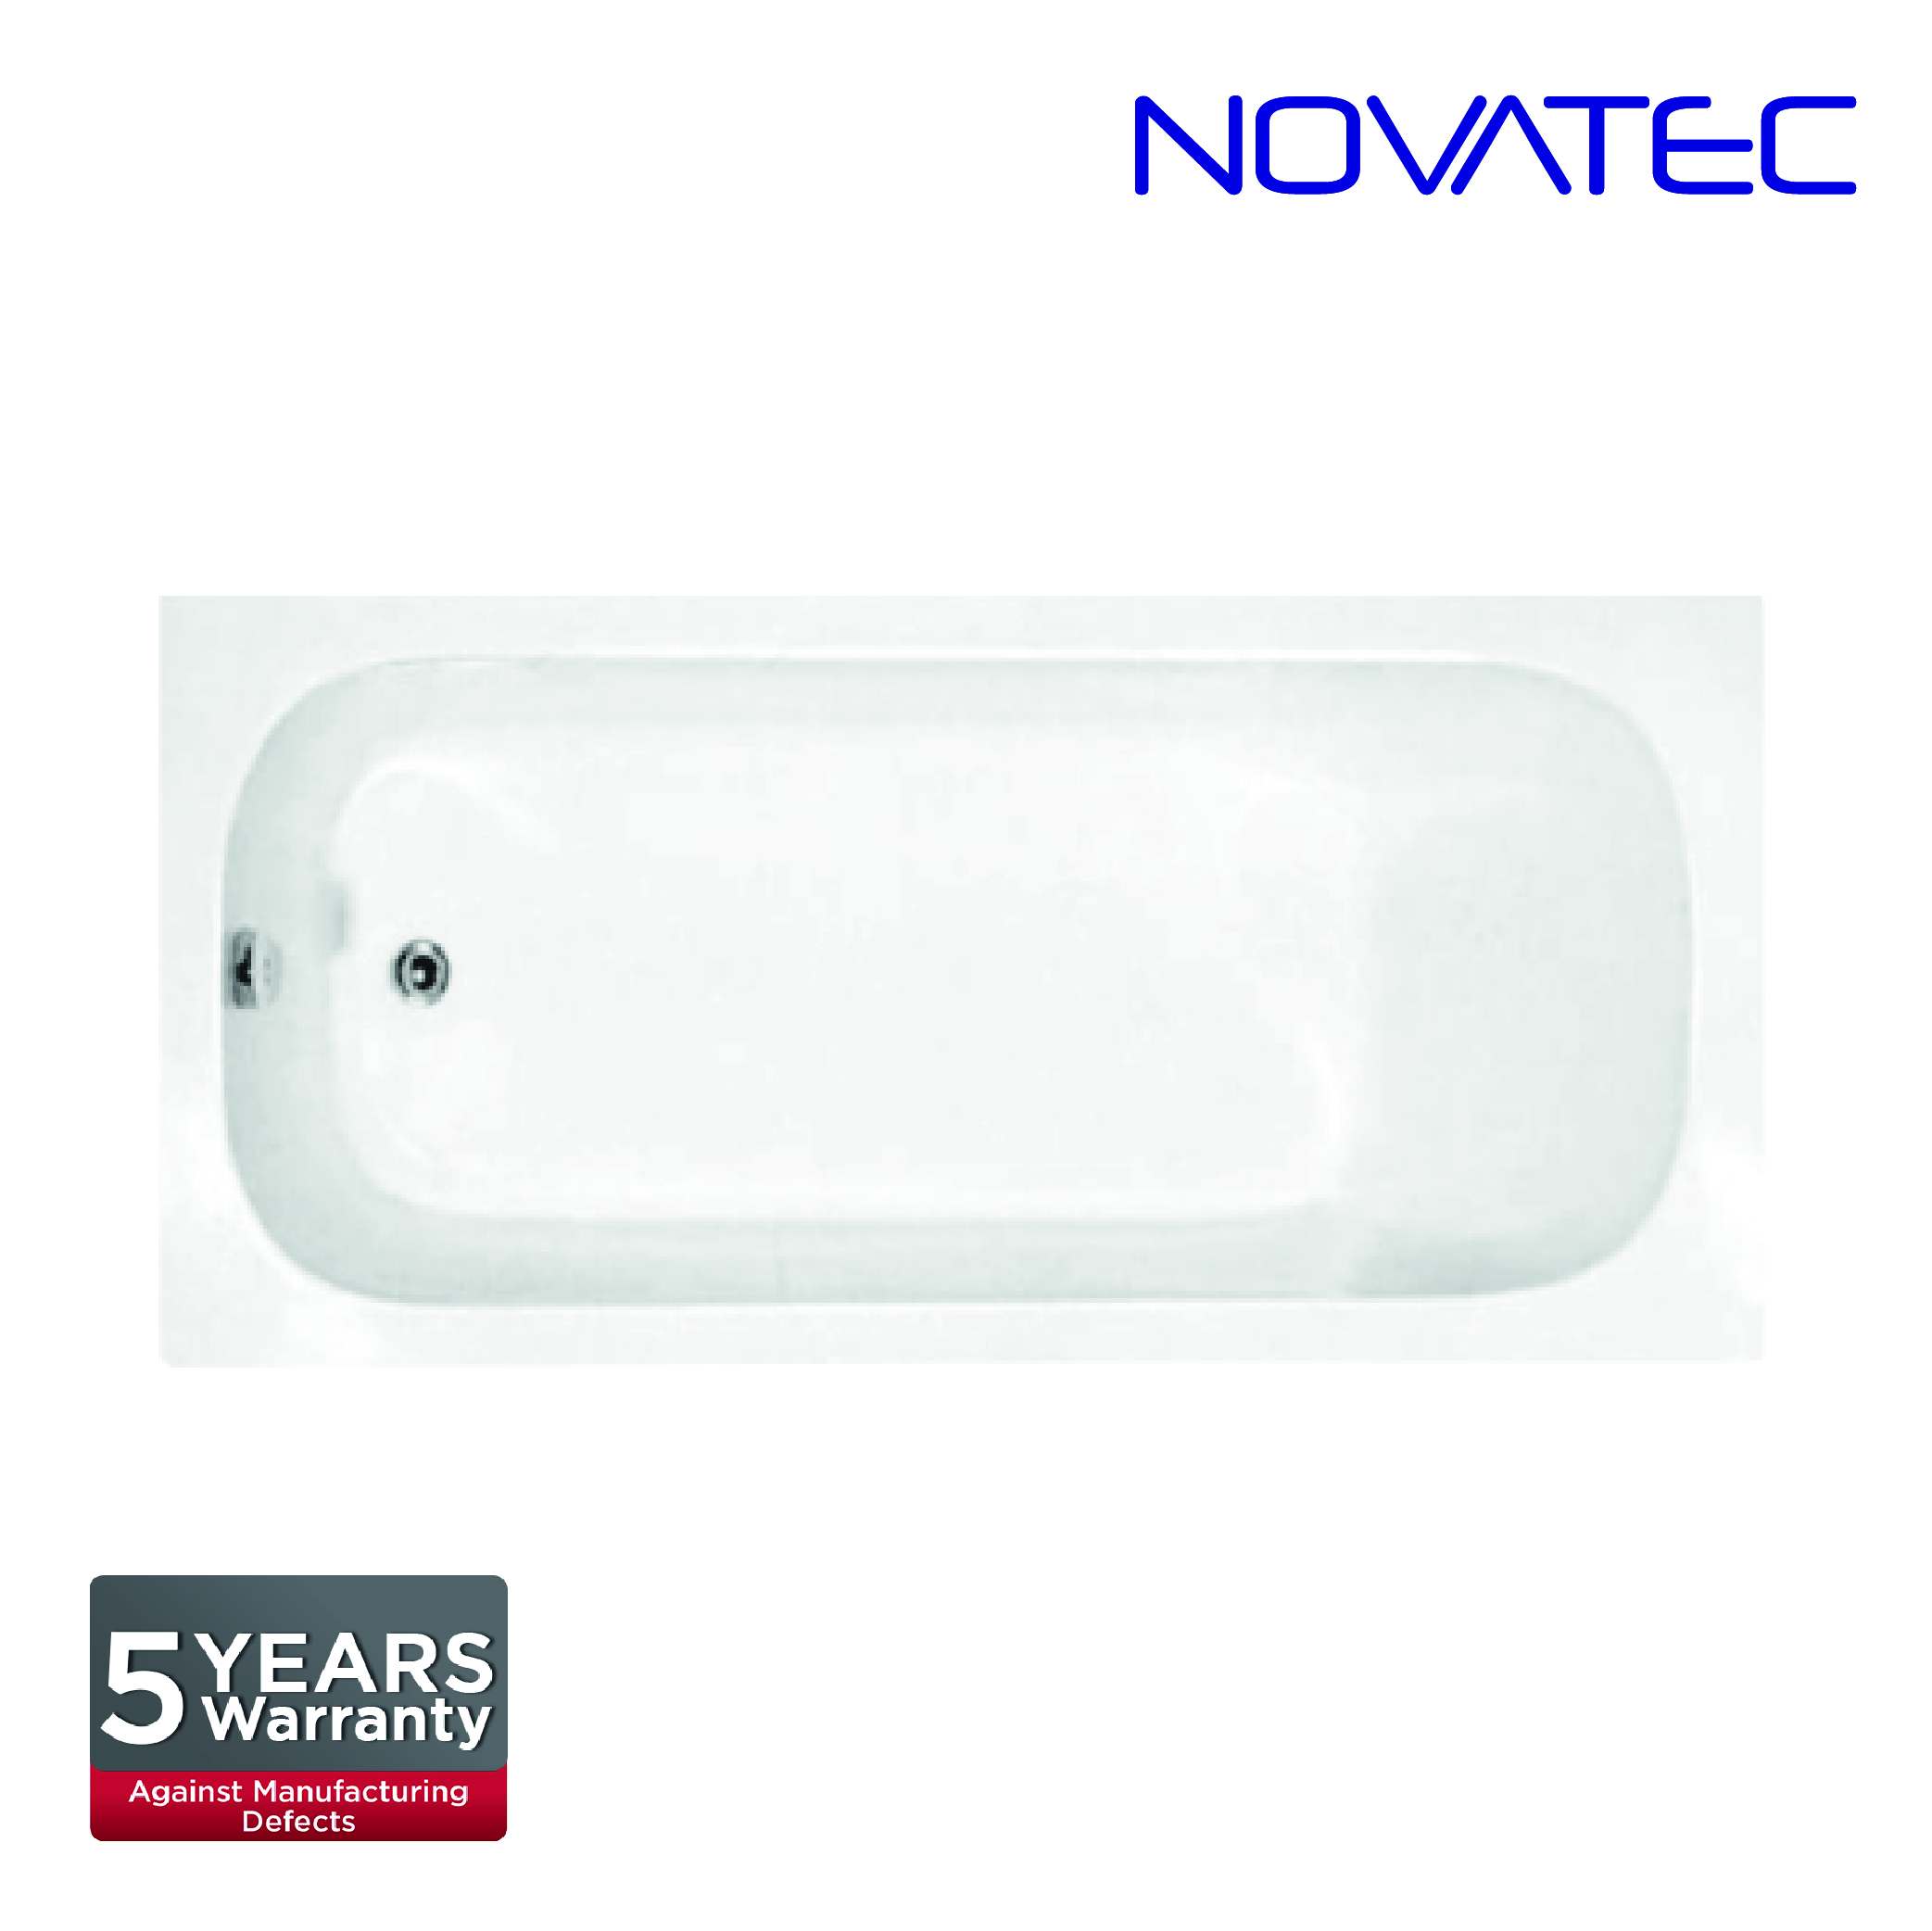 Novatec SW Rome Bath Tub AT-BT160307B